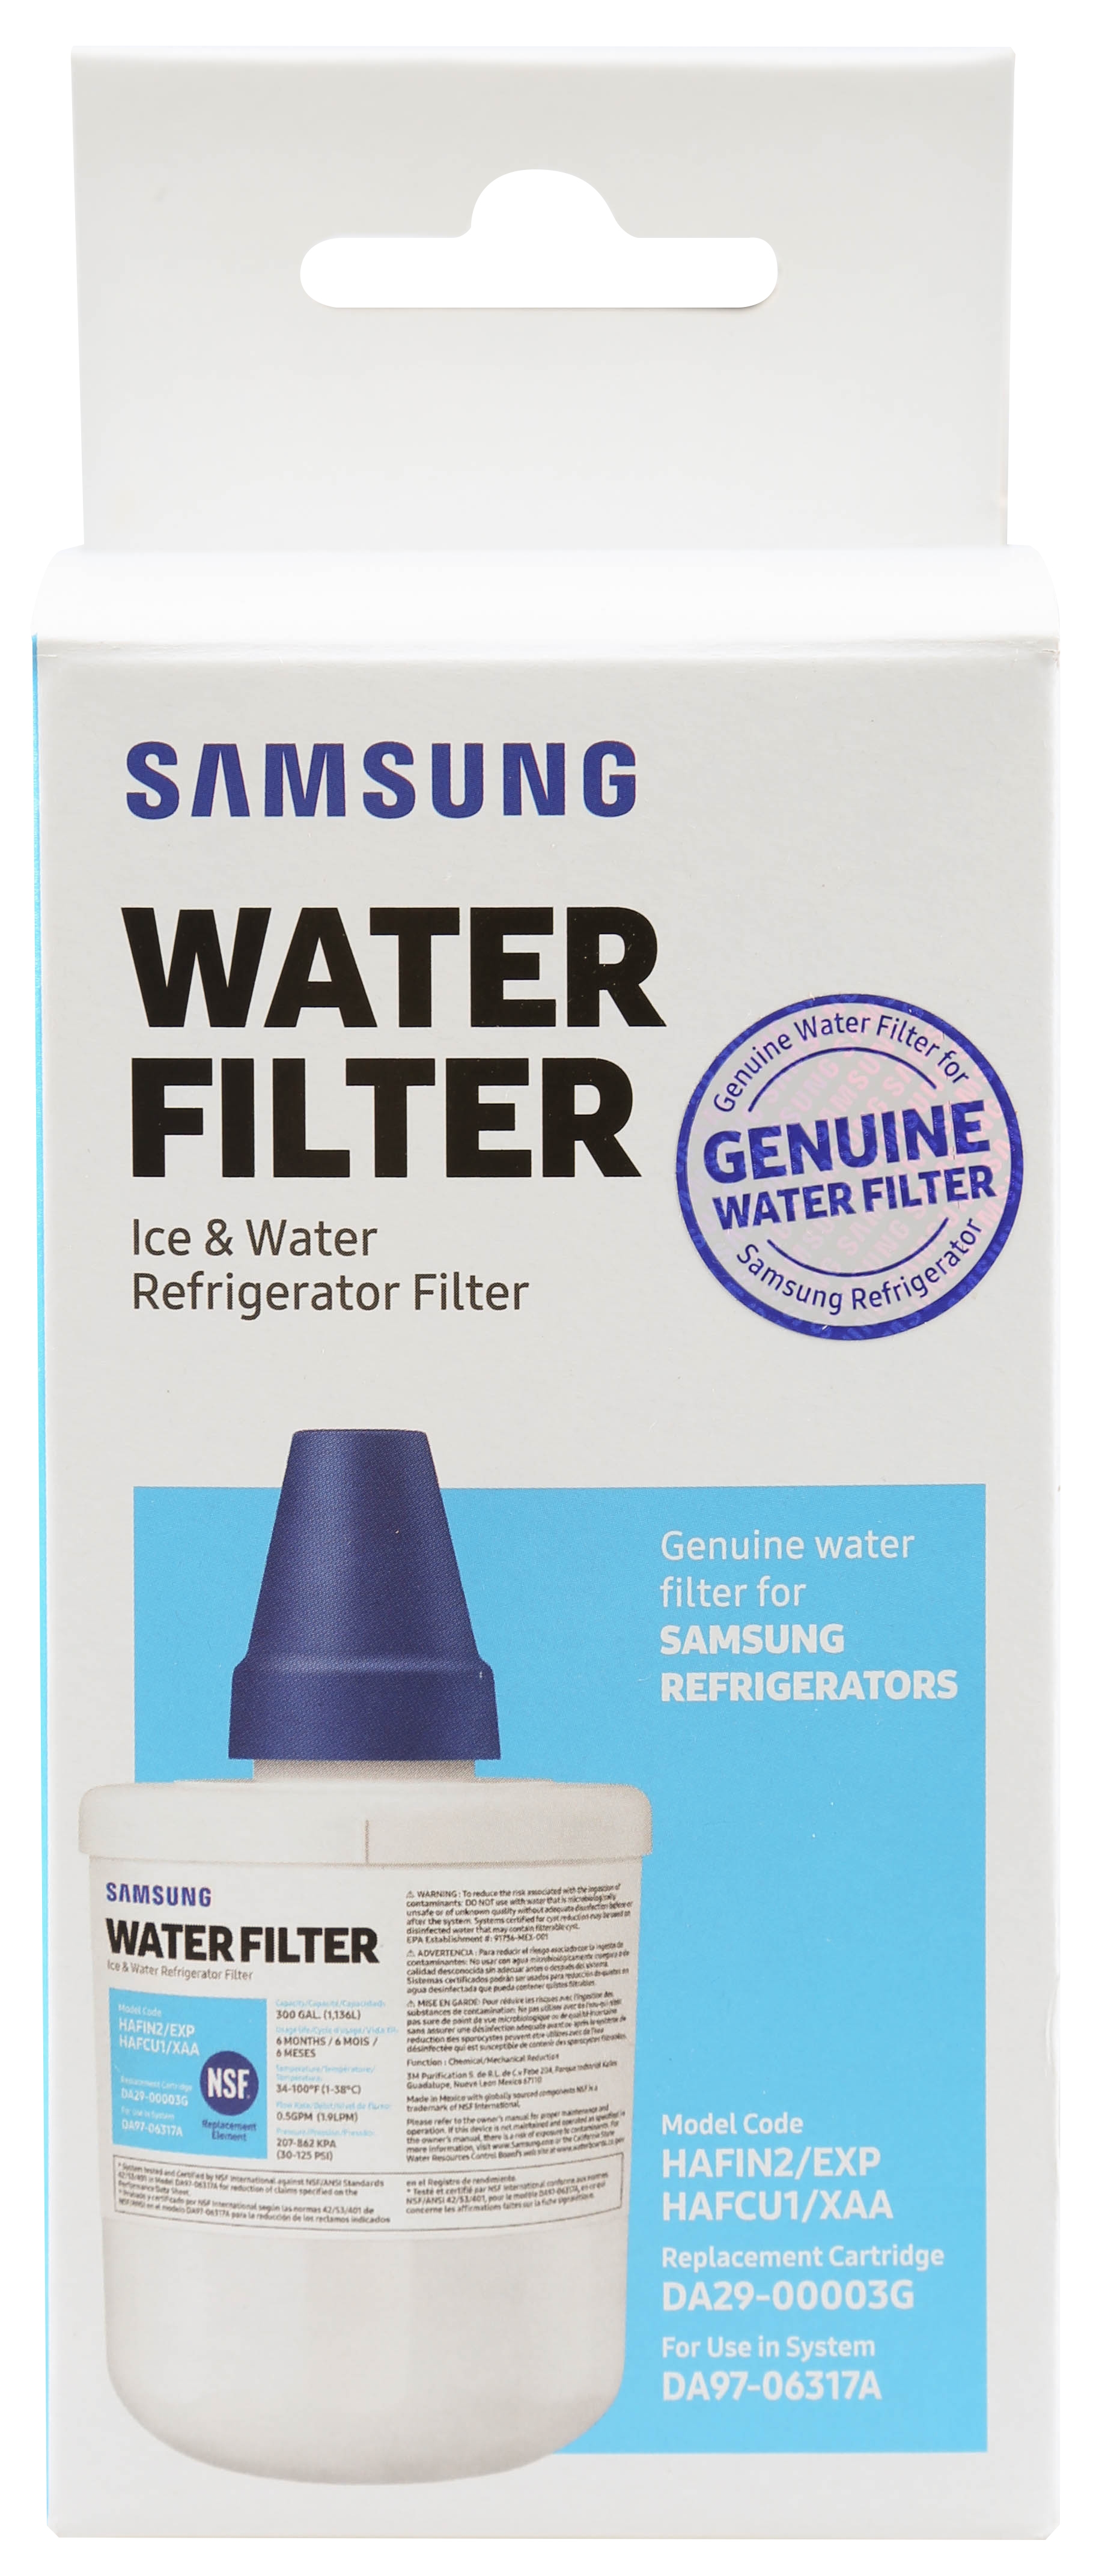 Thumbnail image of HAFCU1 Water Filter